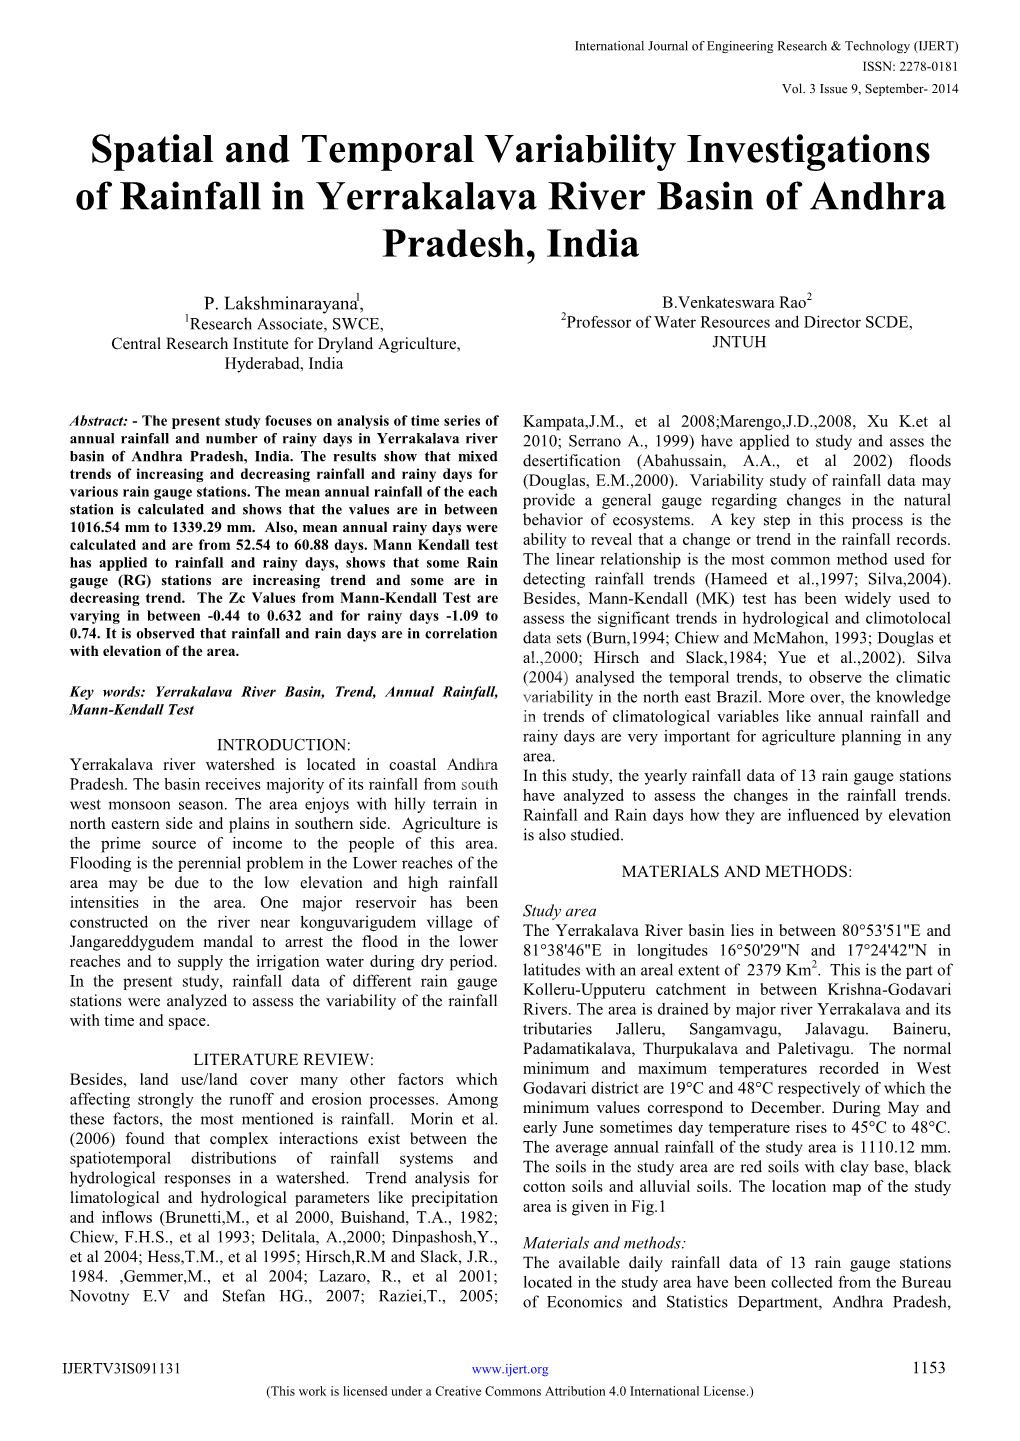 Spatial and Temporal Variability Investigations of Rainfall in Yerrakalava River Basin of Andhra Pradesh, India